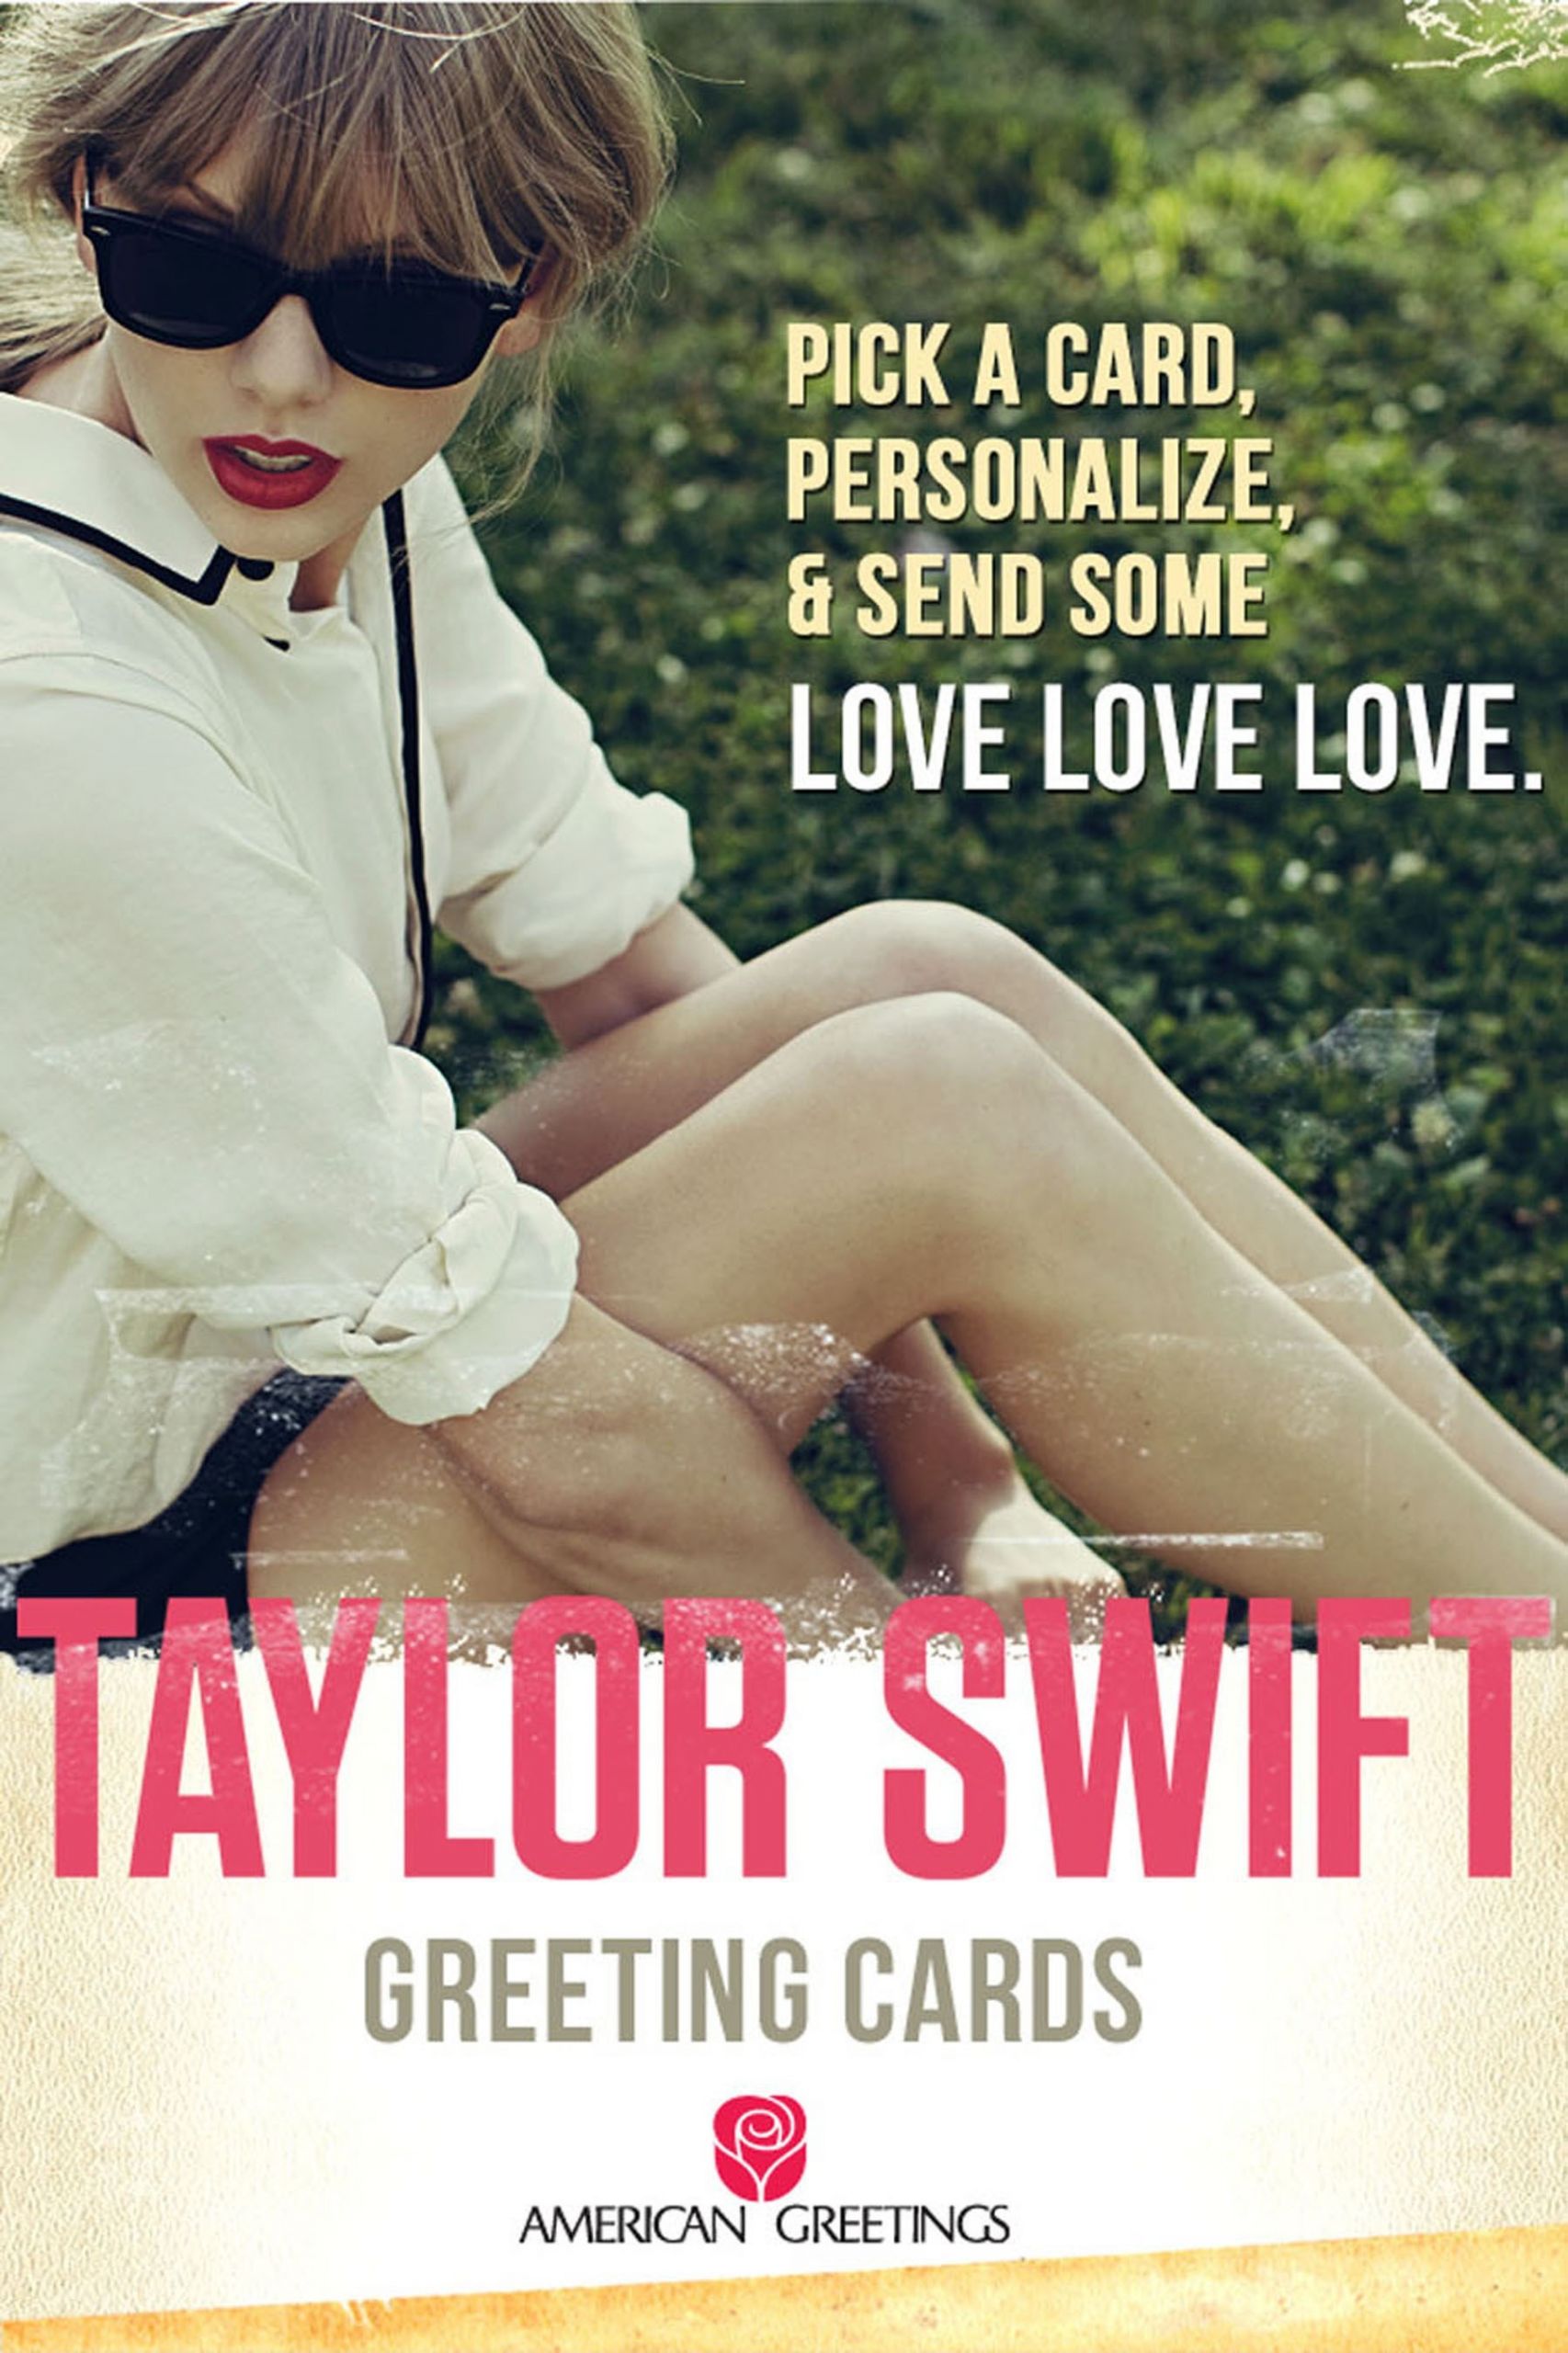 Taylor Swift Birthday Card
 American Greetings Launches Taylor Swift Greeting Card